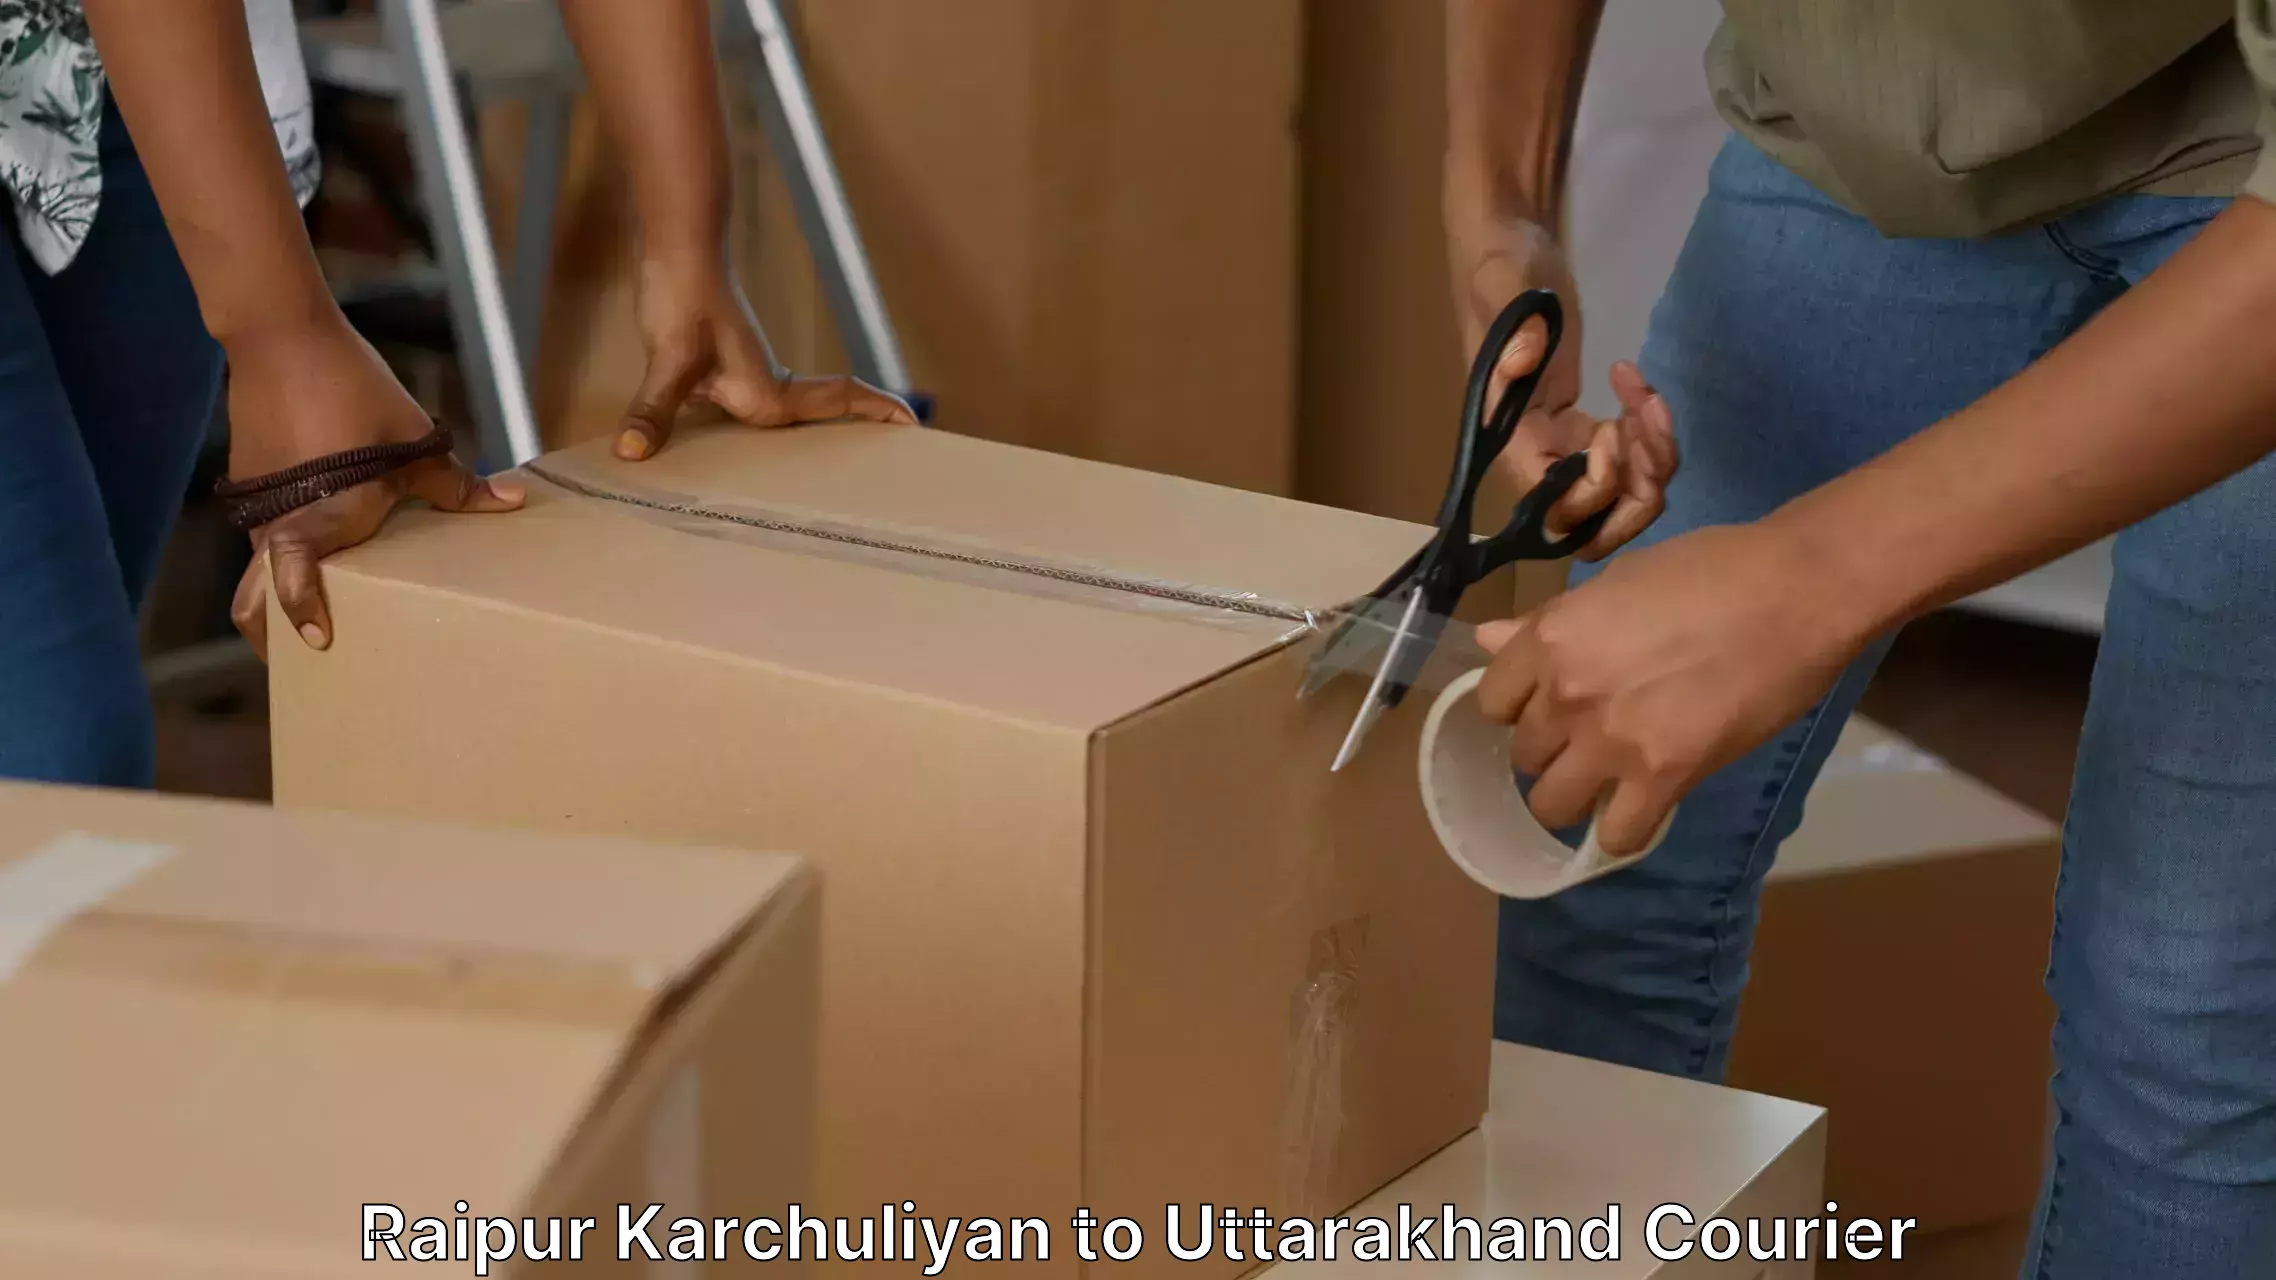 Furniture moving experts Raipur Karchuliyan to Rudrapur